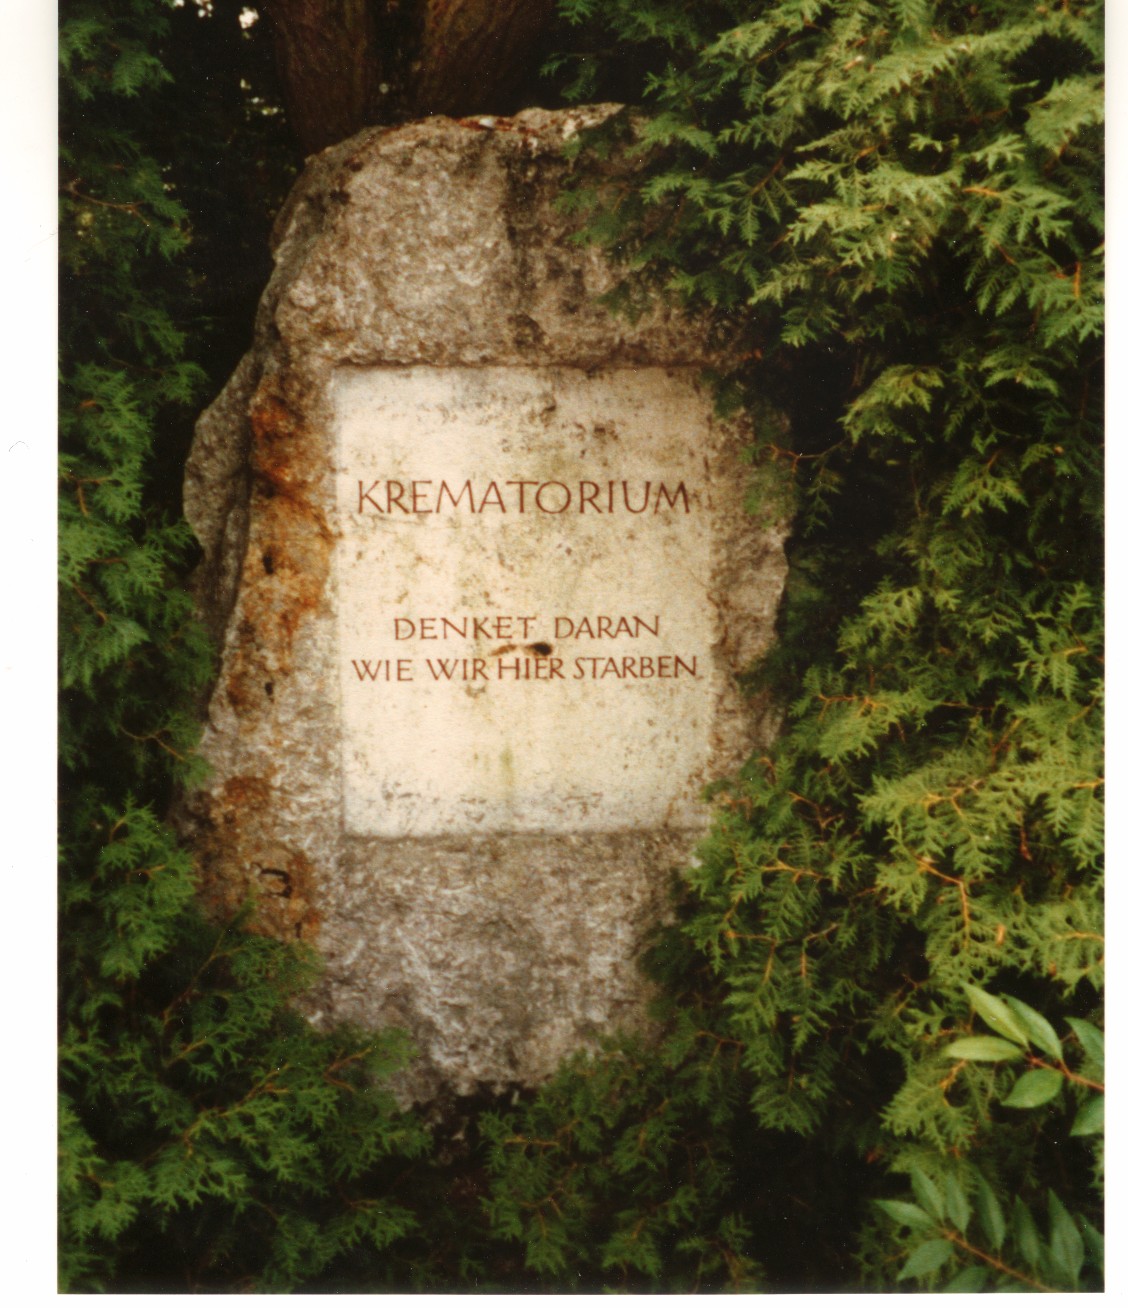 Dachau_Krematorium_sign